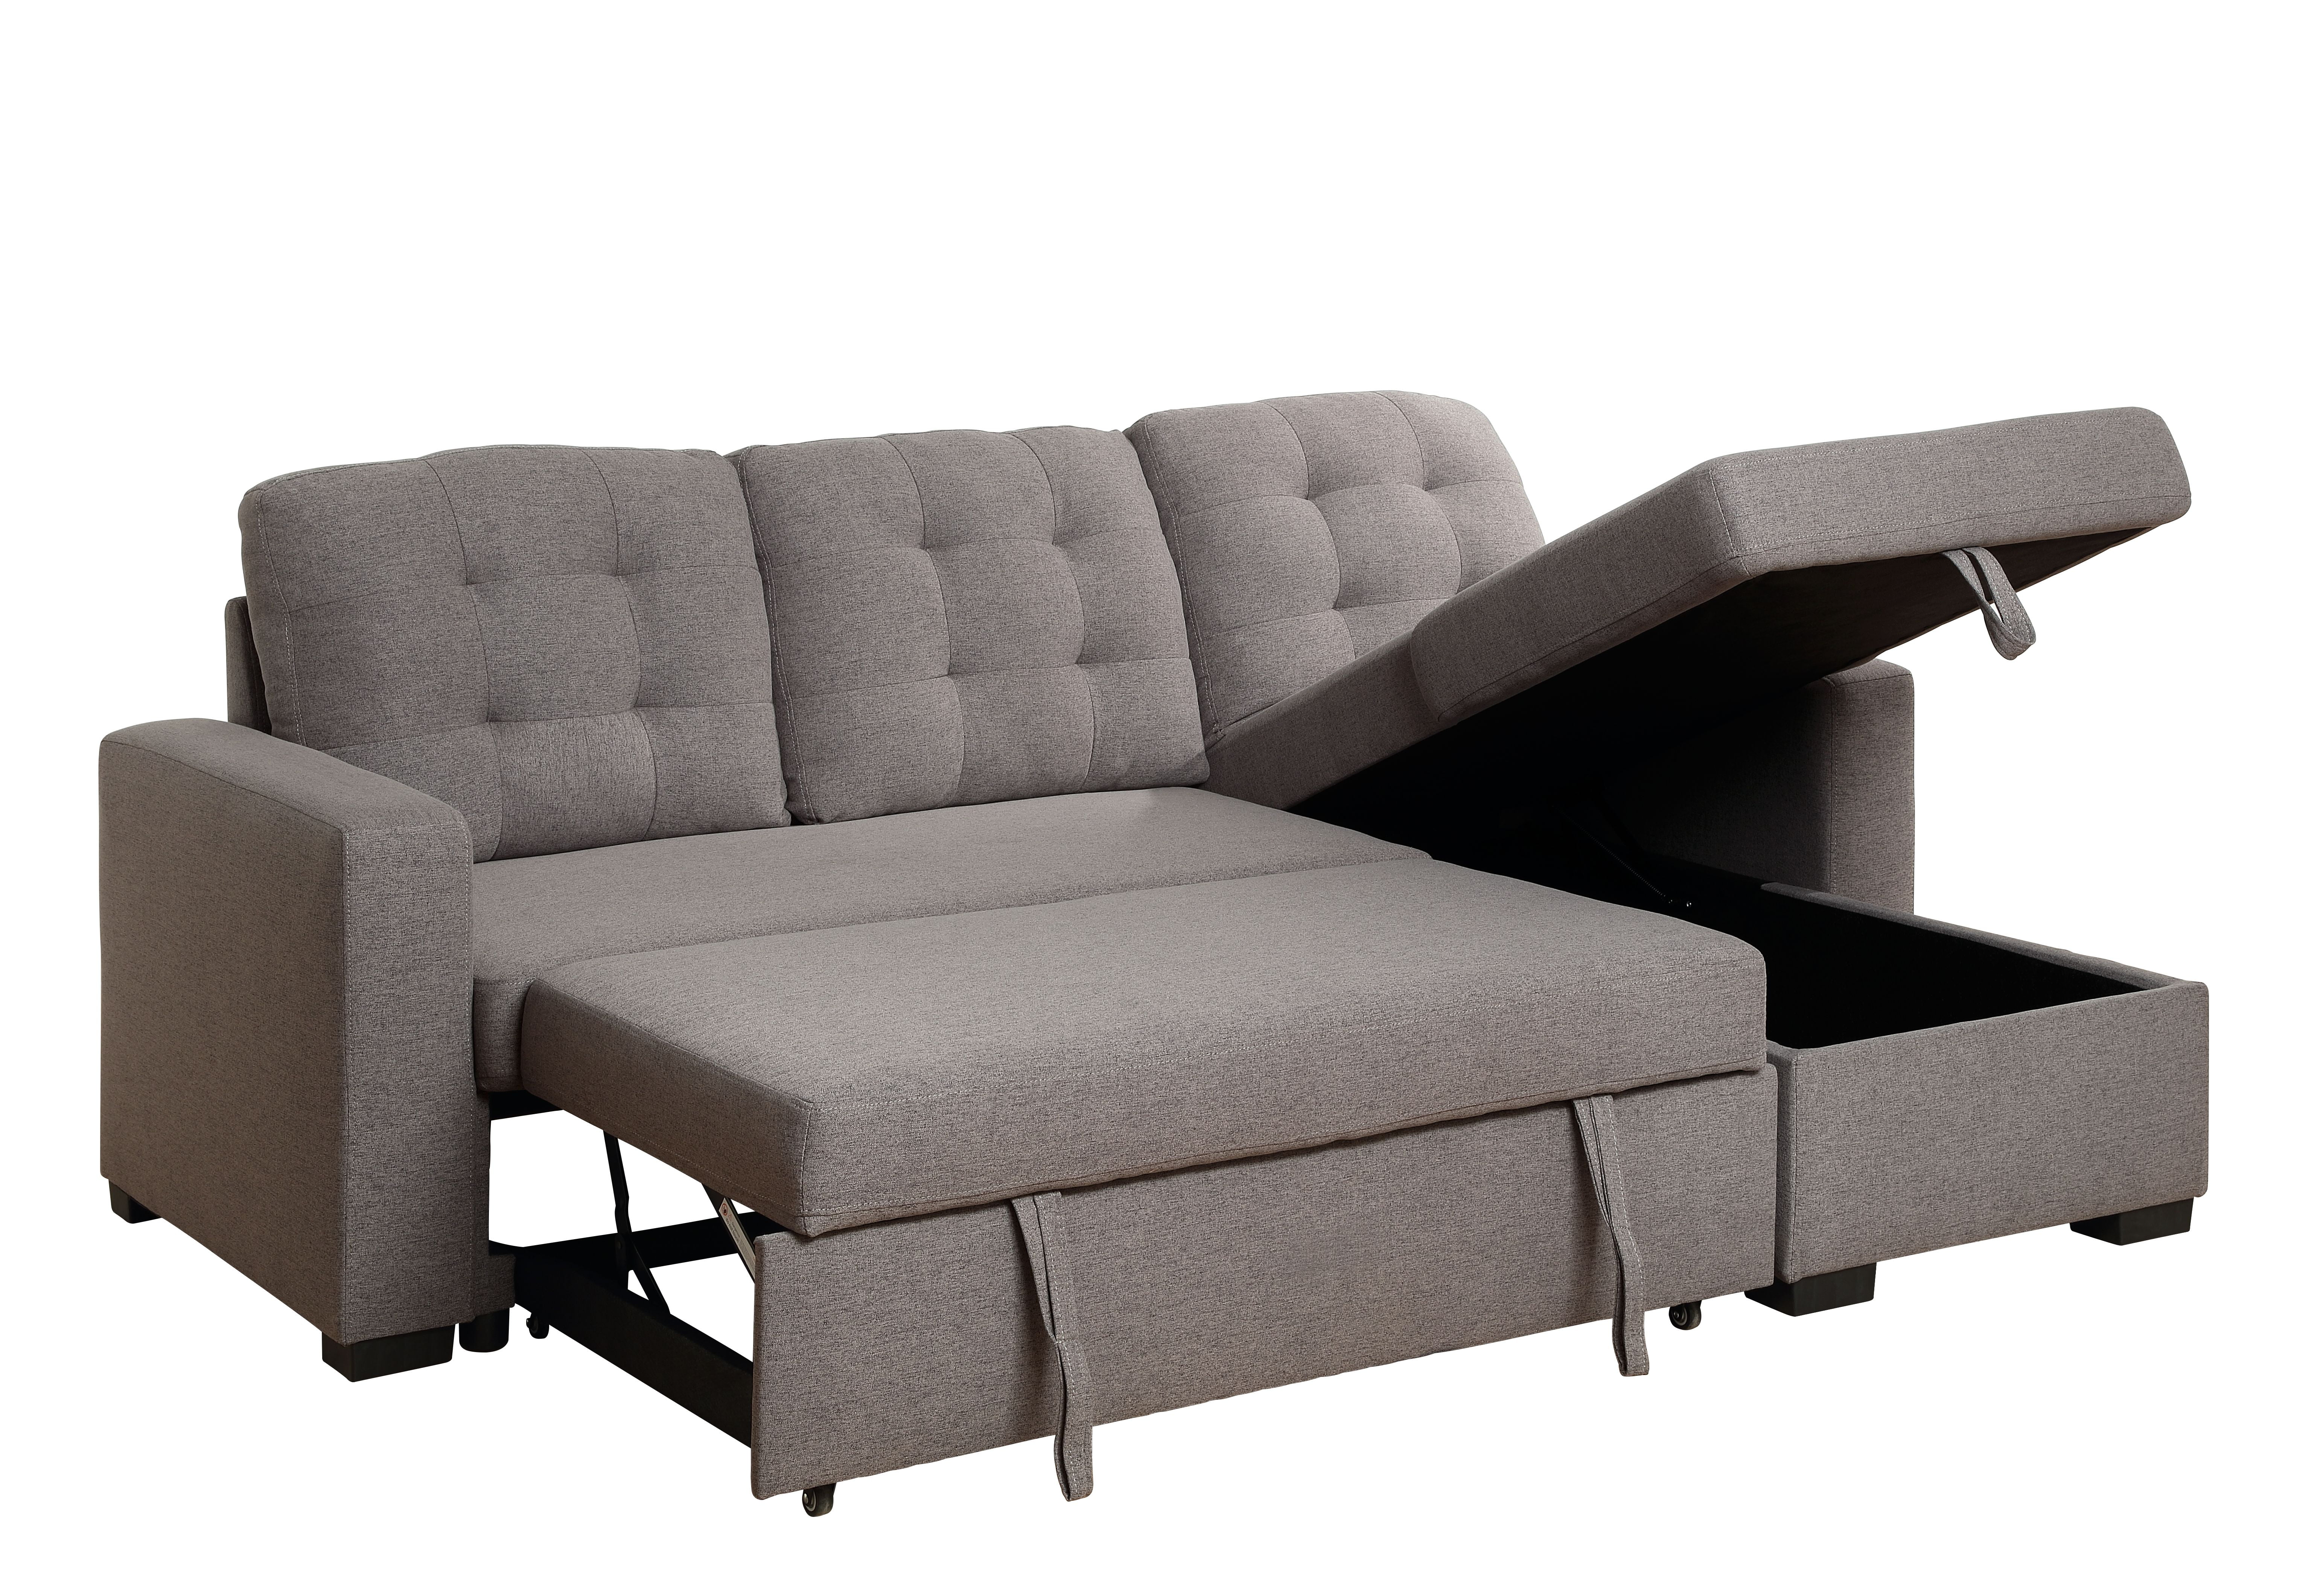 Acme Furniture Reversible Storage Sleeper Sofa in Fabric - Walmart.com